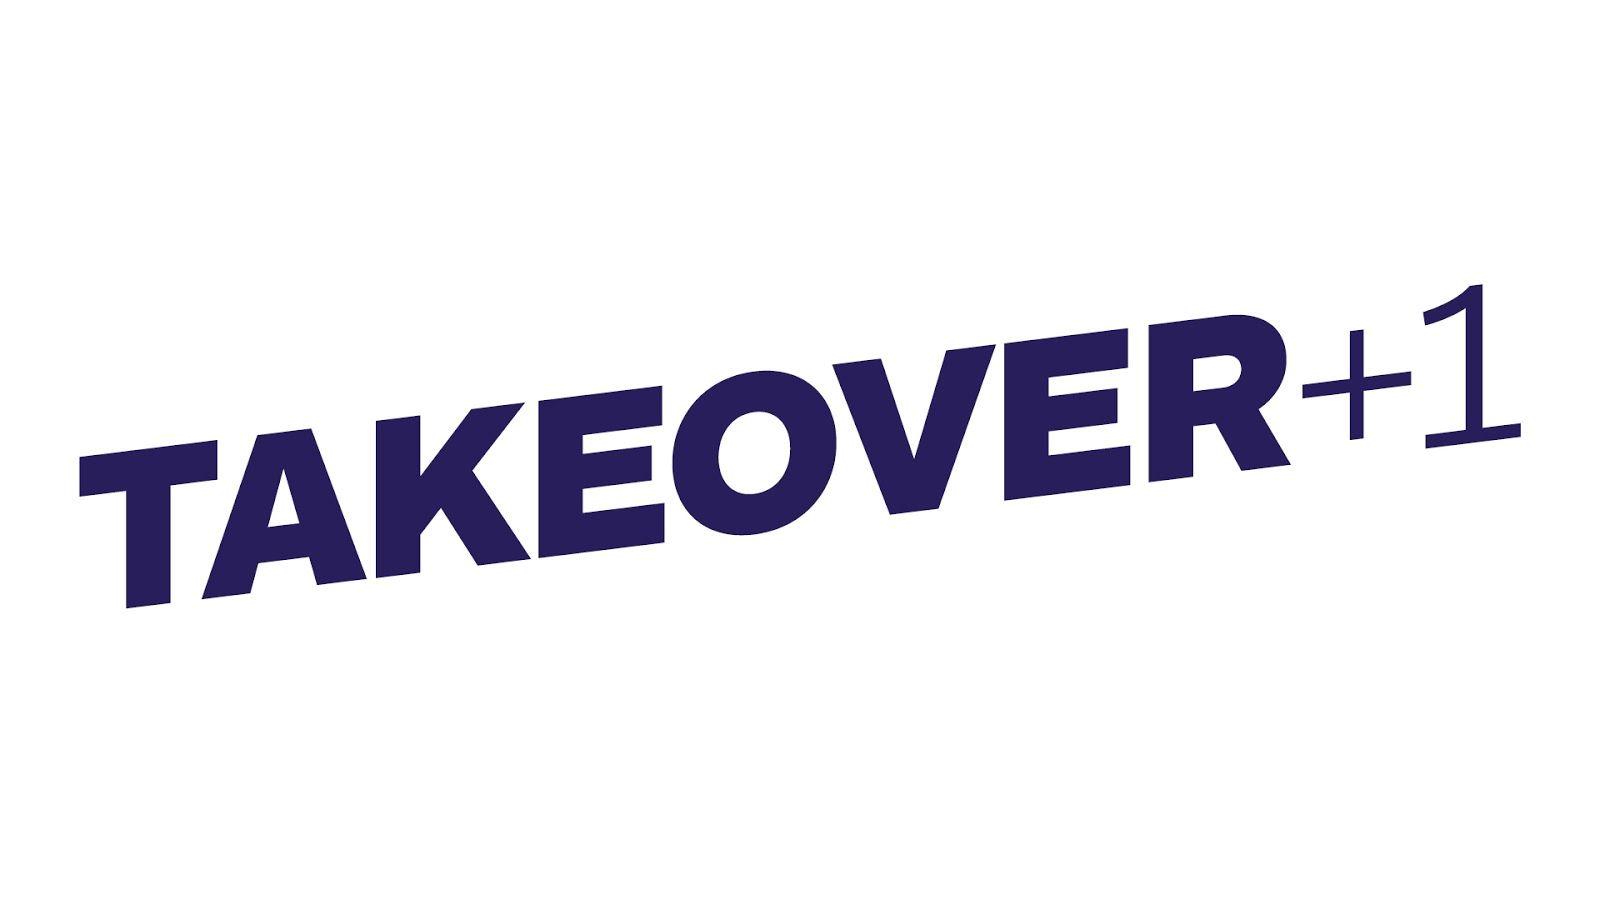 Takeover Logo - Design For Print & Web: Final Logos